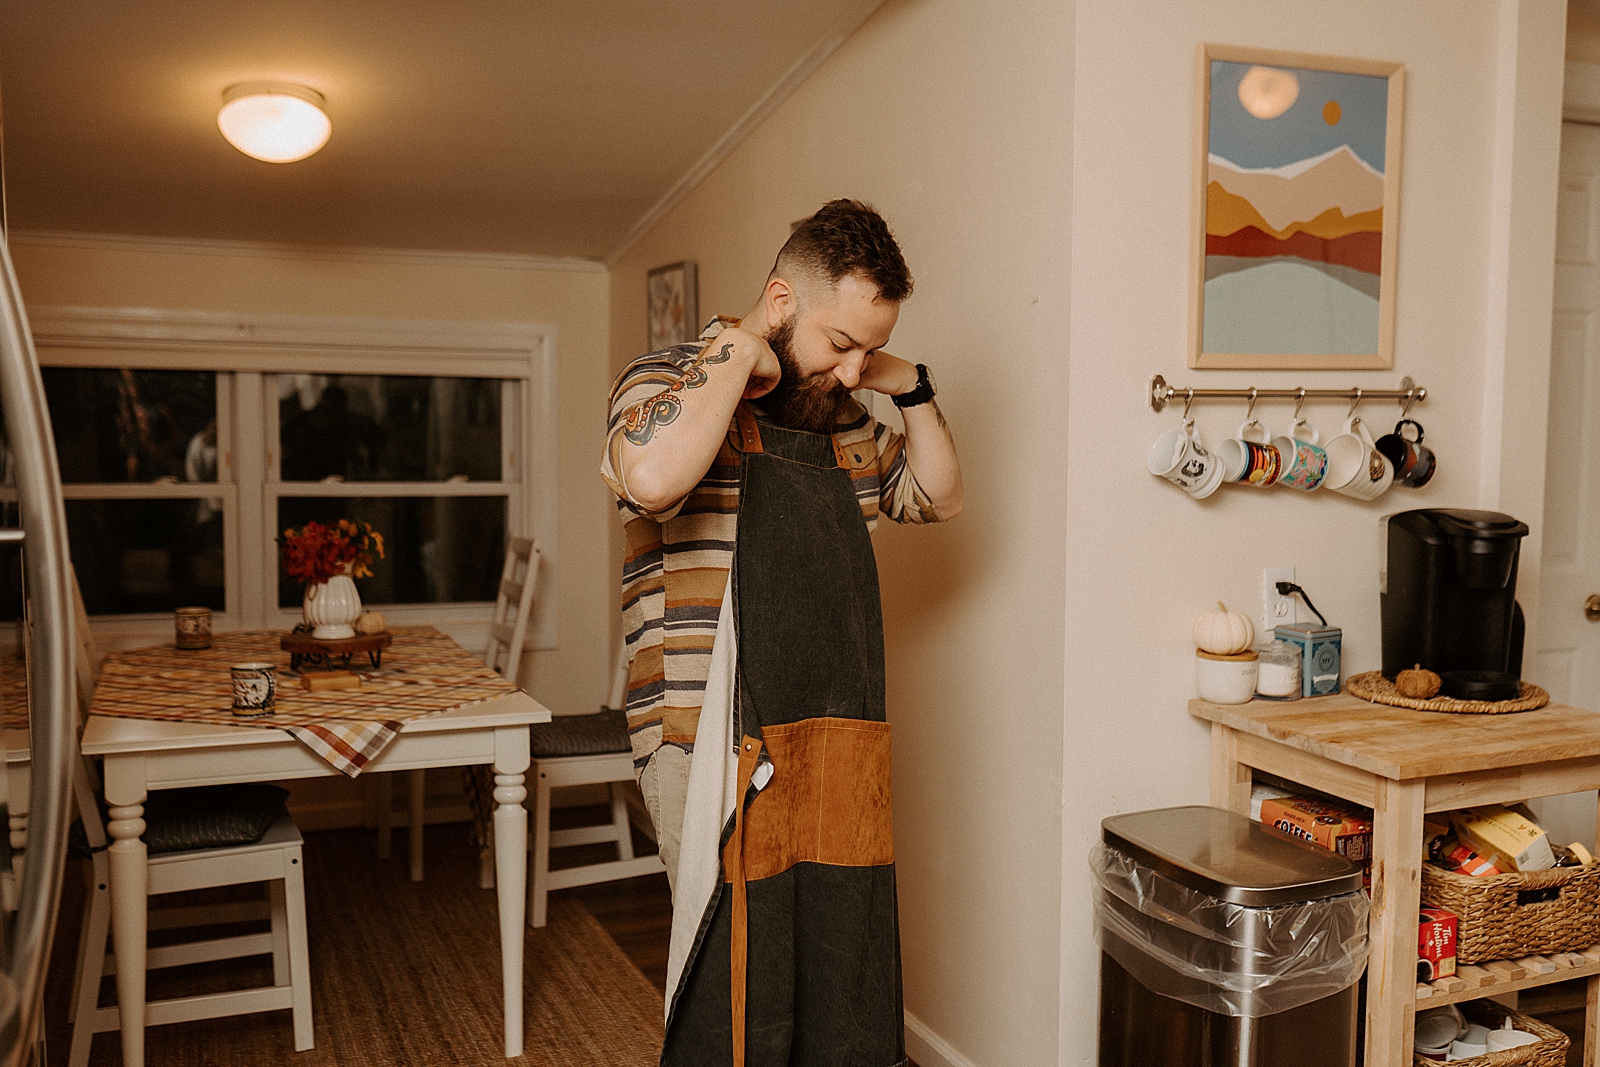 Man putting on apron while entering kitchen